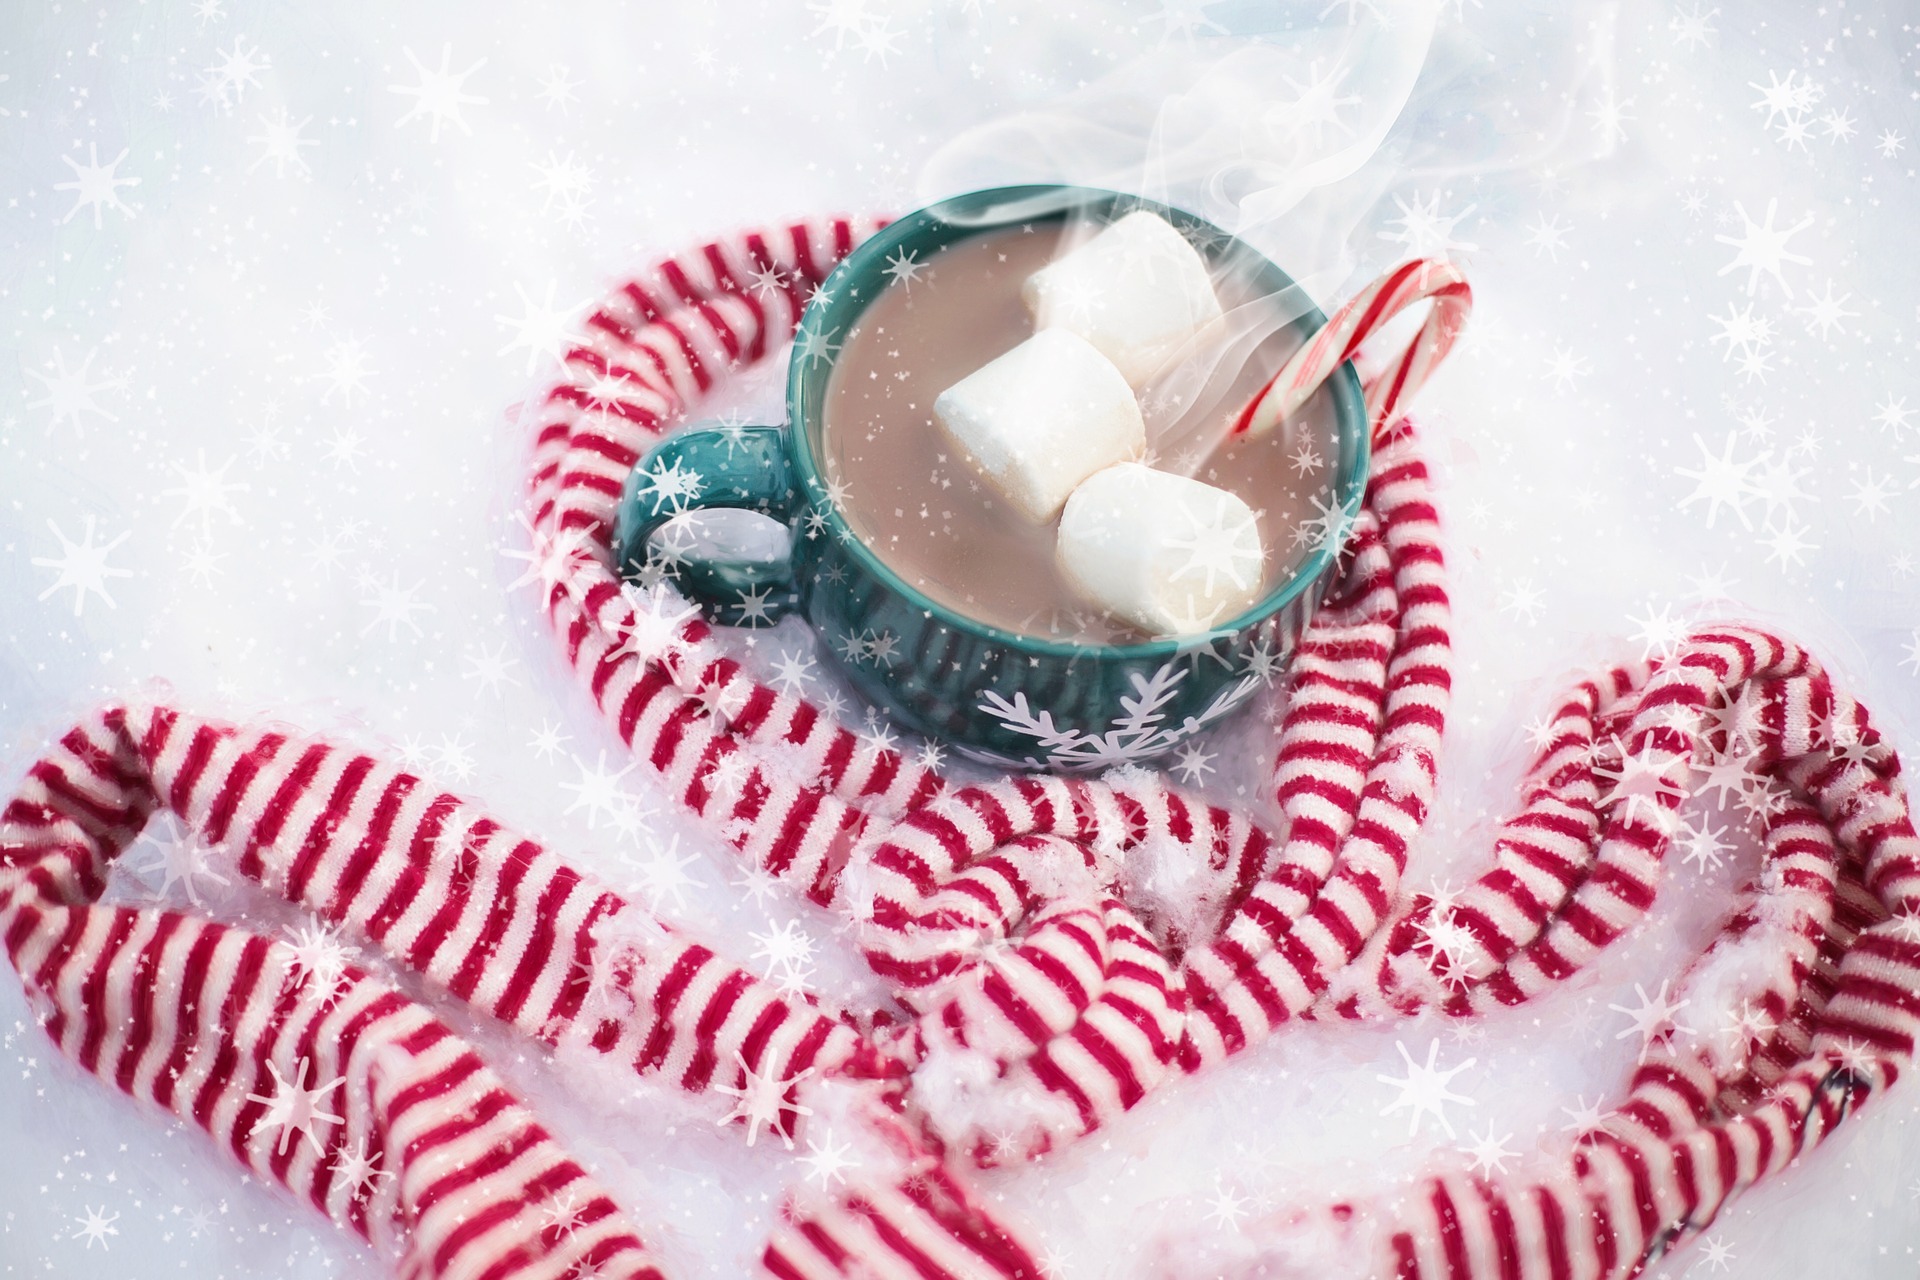 Ice and hot chocolate photo